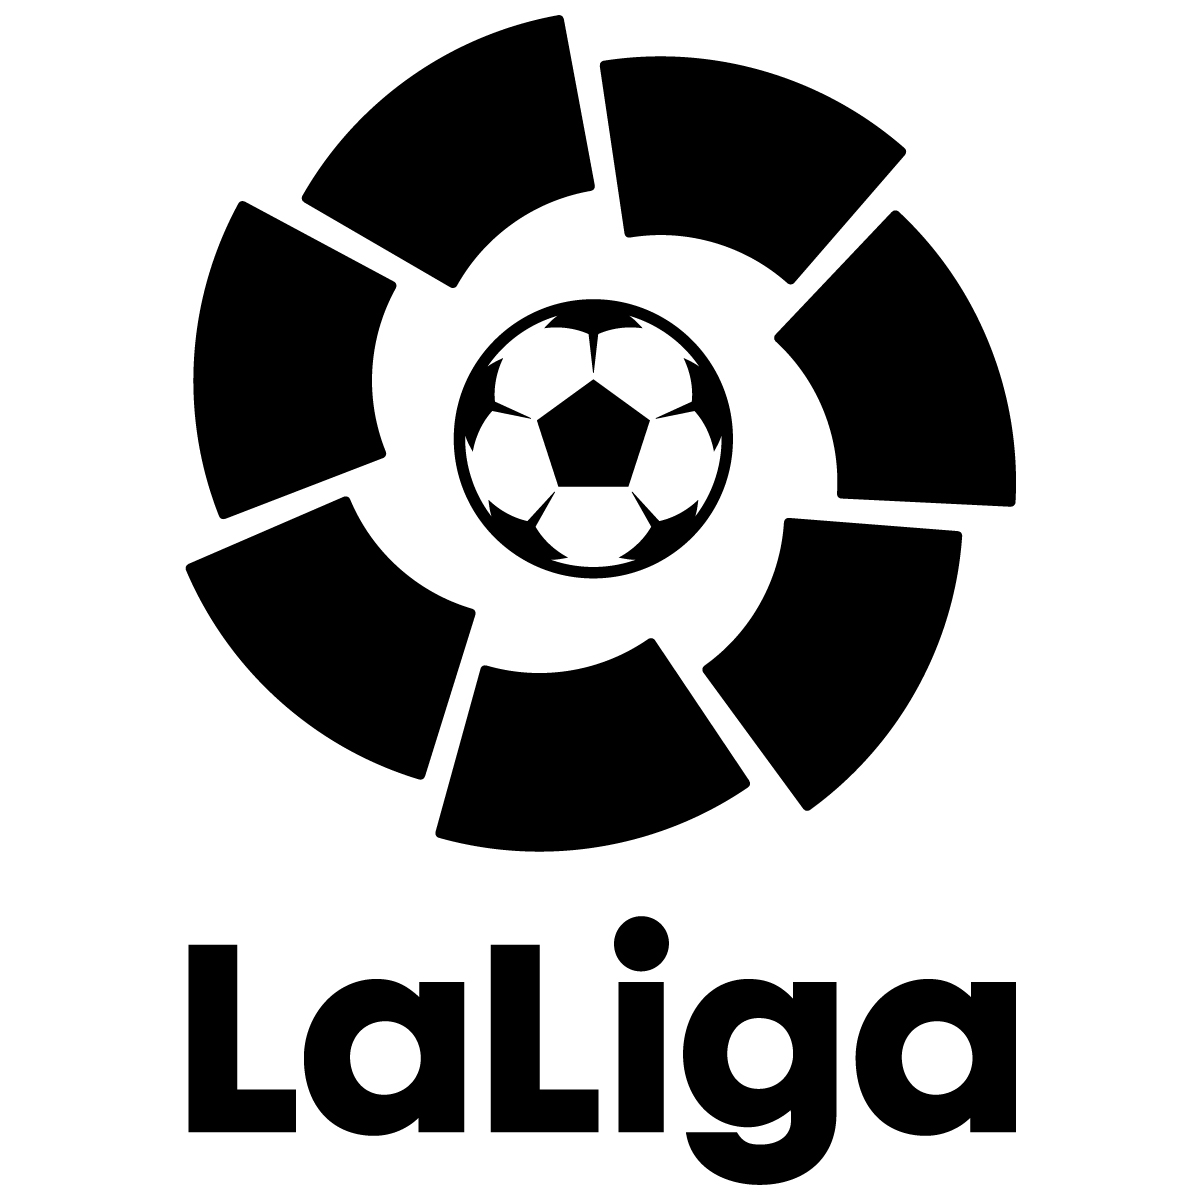 la liga logo png 10 free Cliparts | Download images on ...